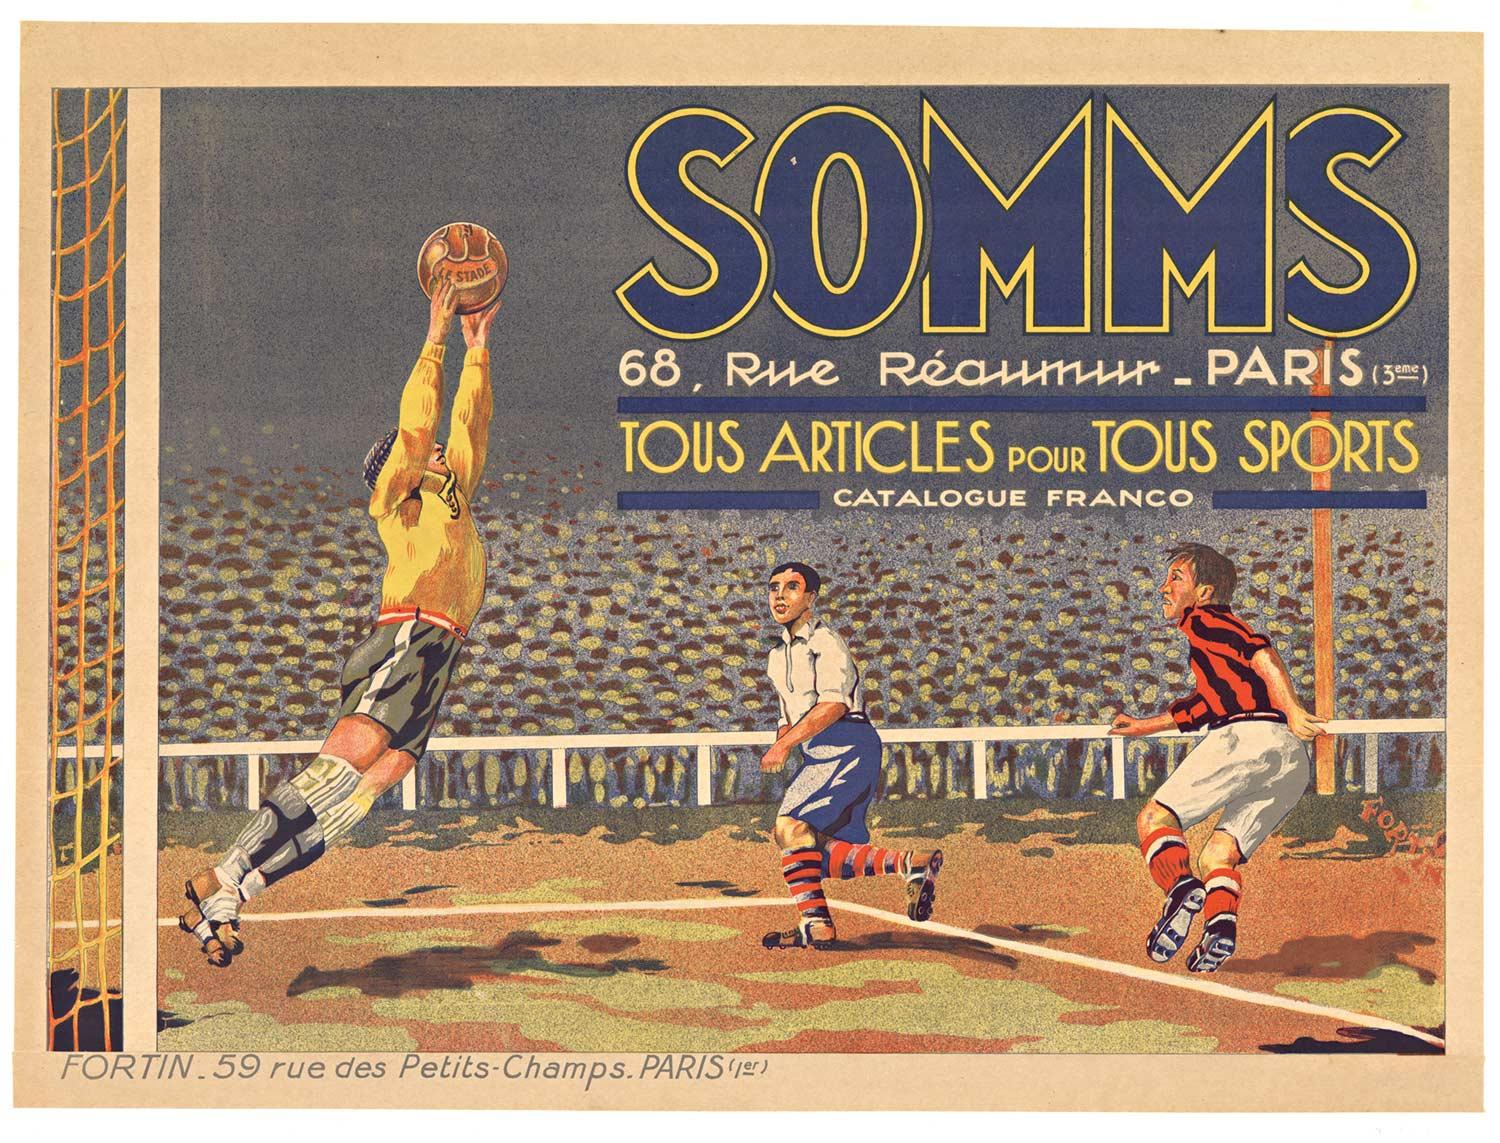 Unknown Print - Original "Somms" tous sports vintage soccer poster